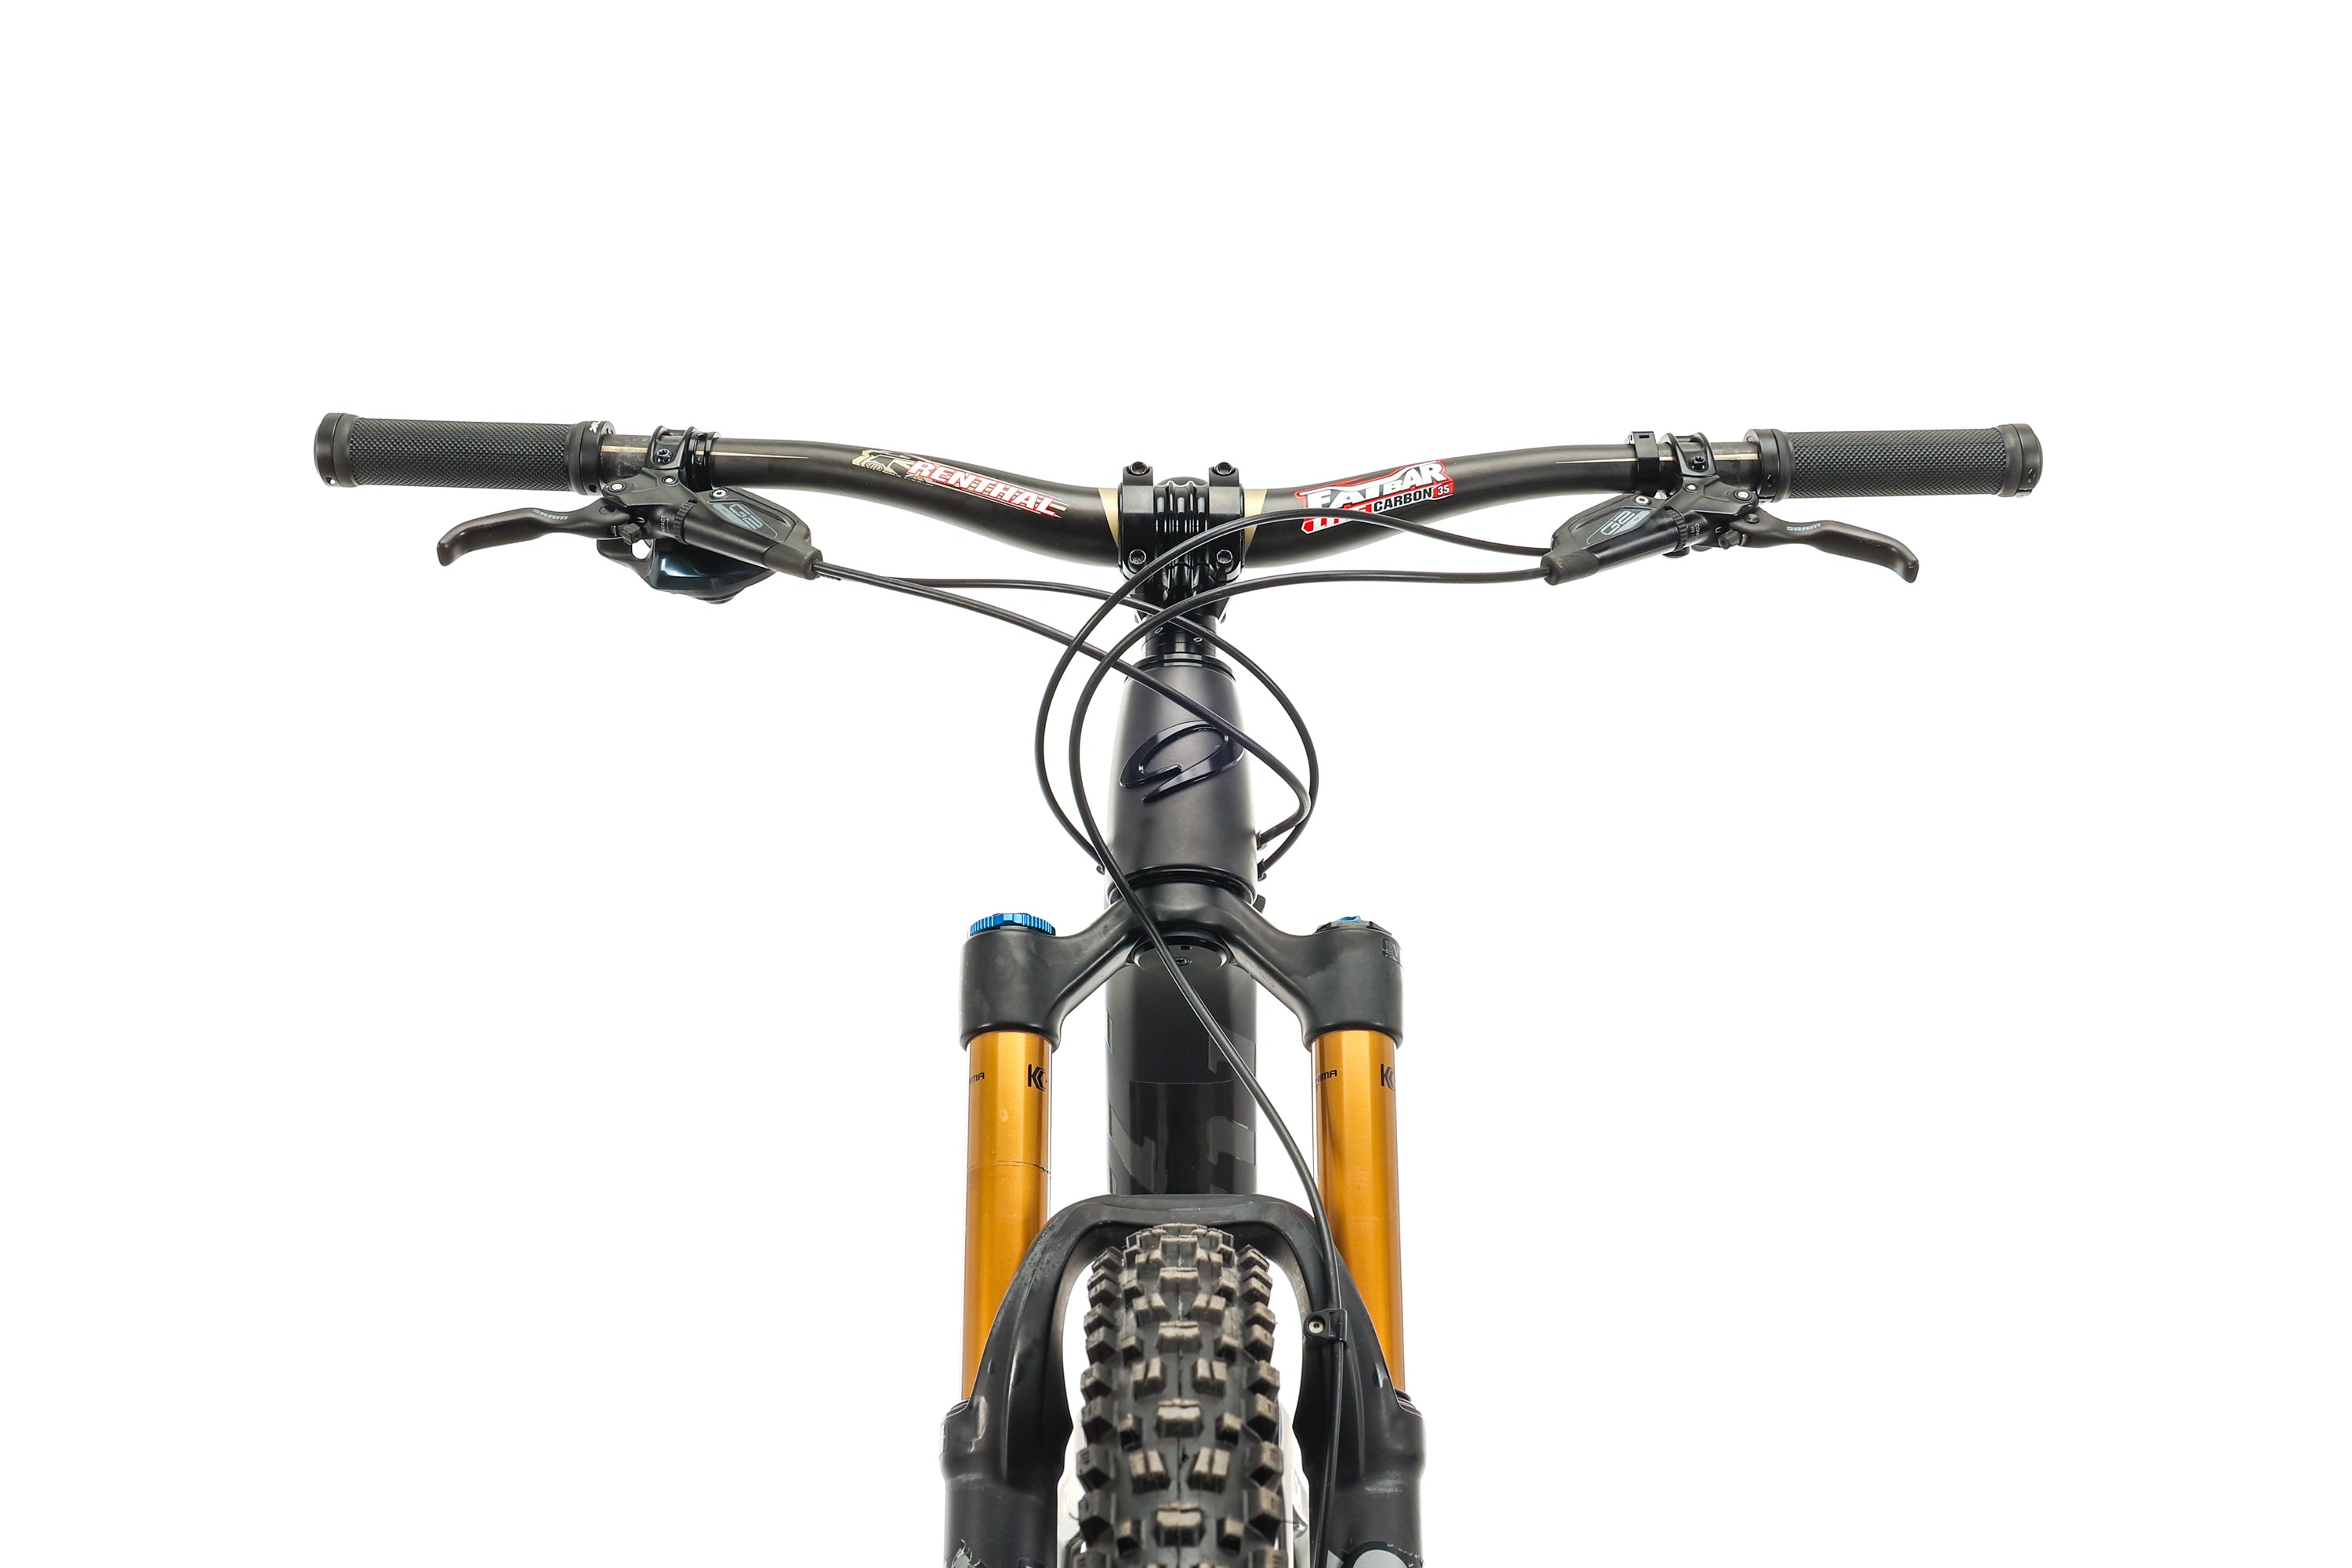 Mountain bike mudguards (+35 designs)